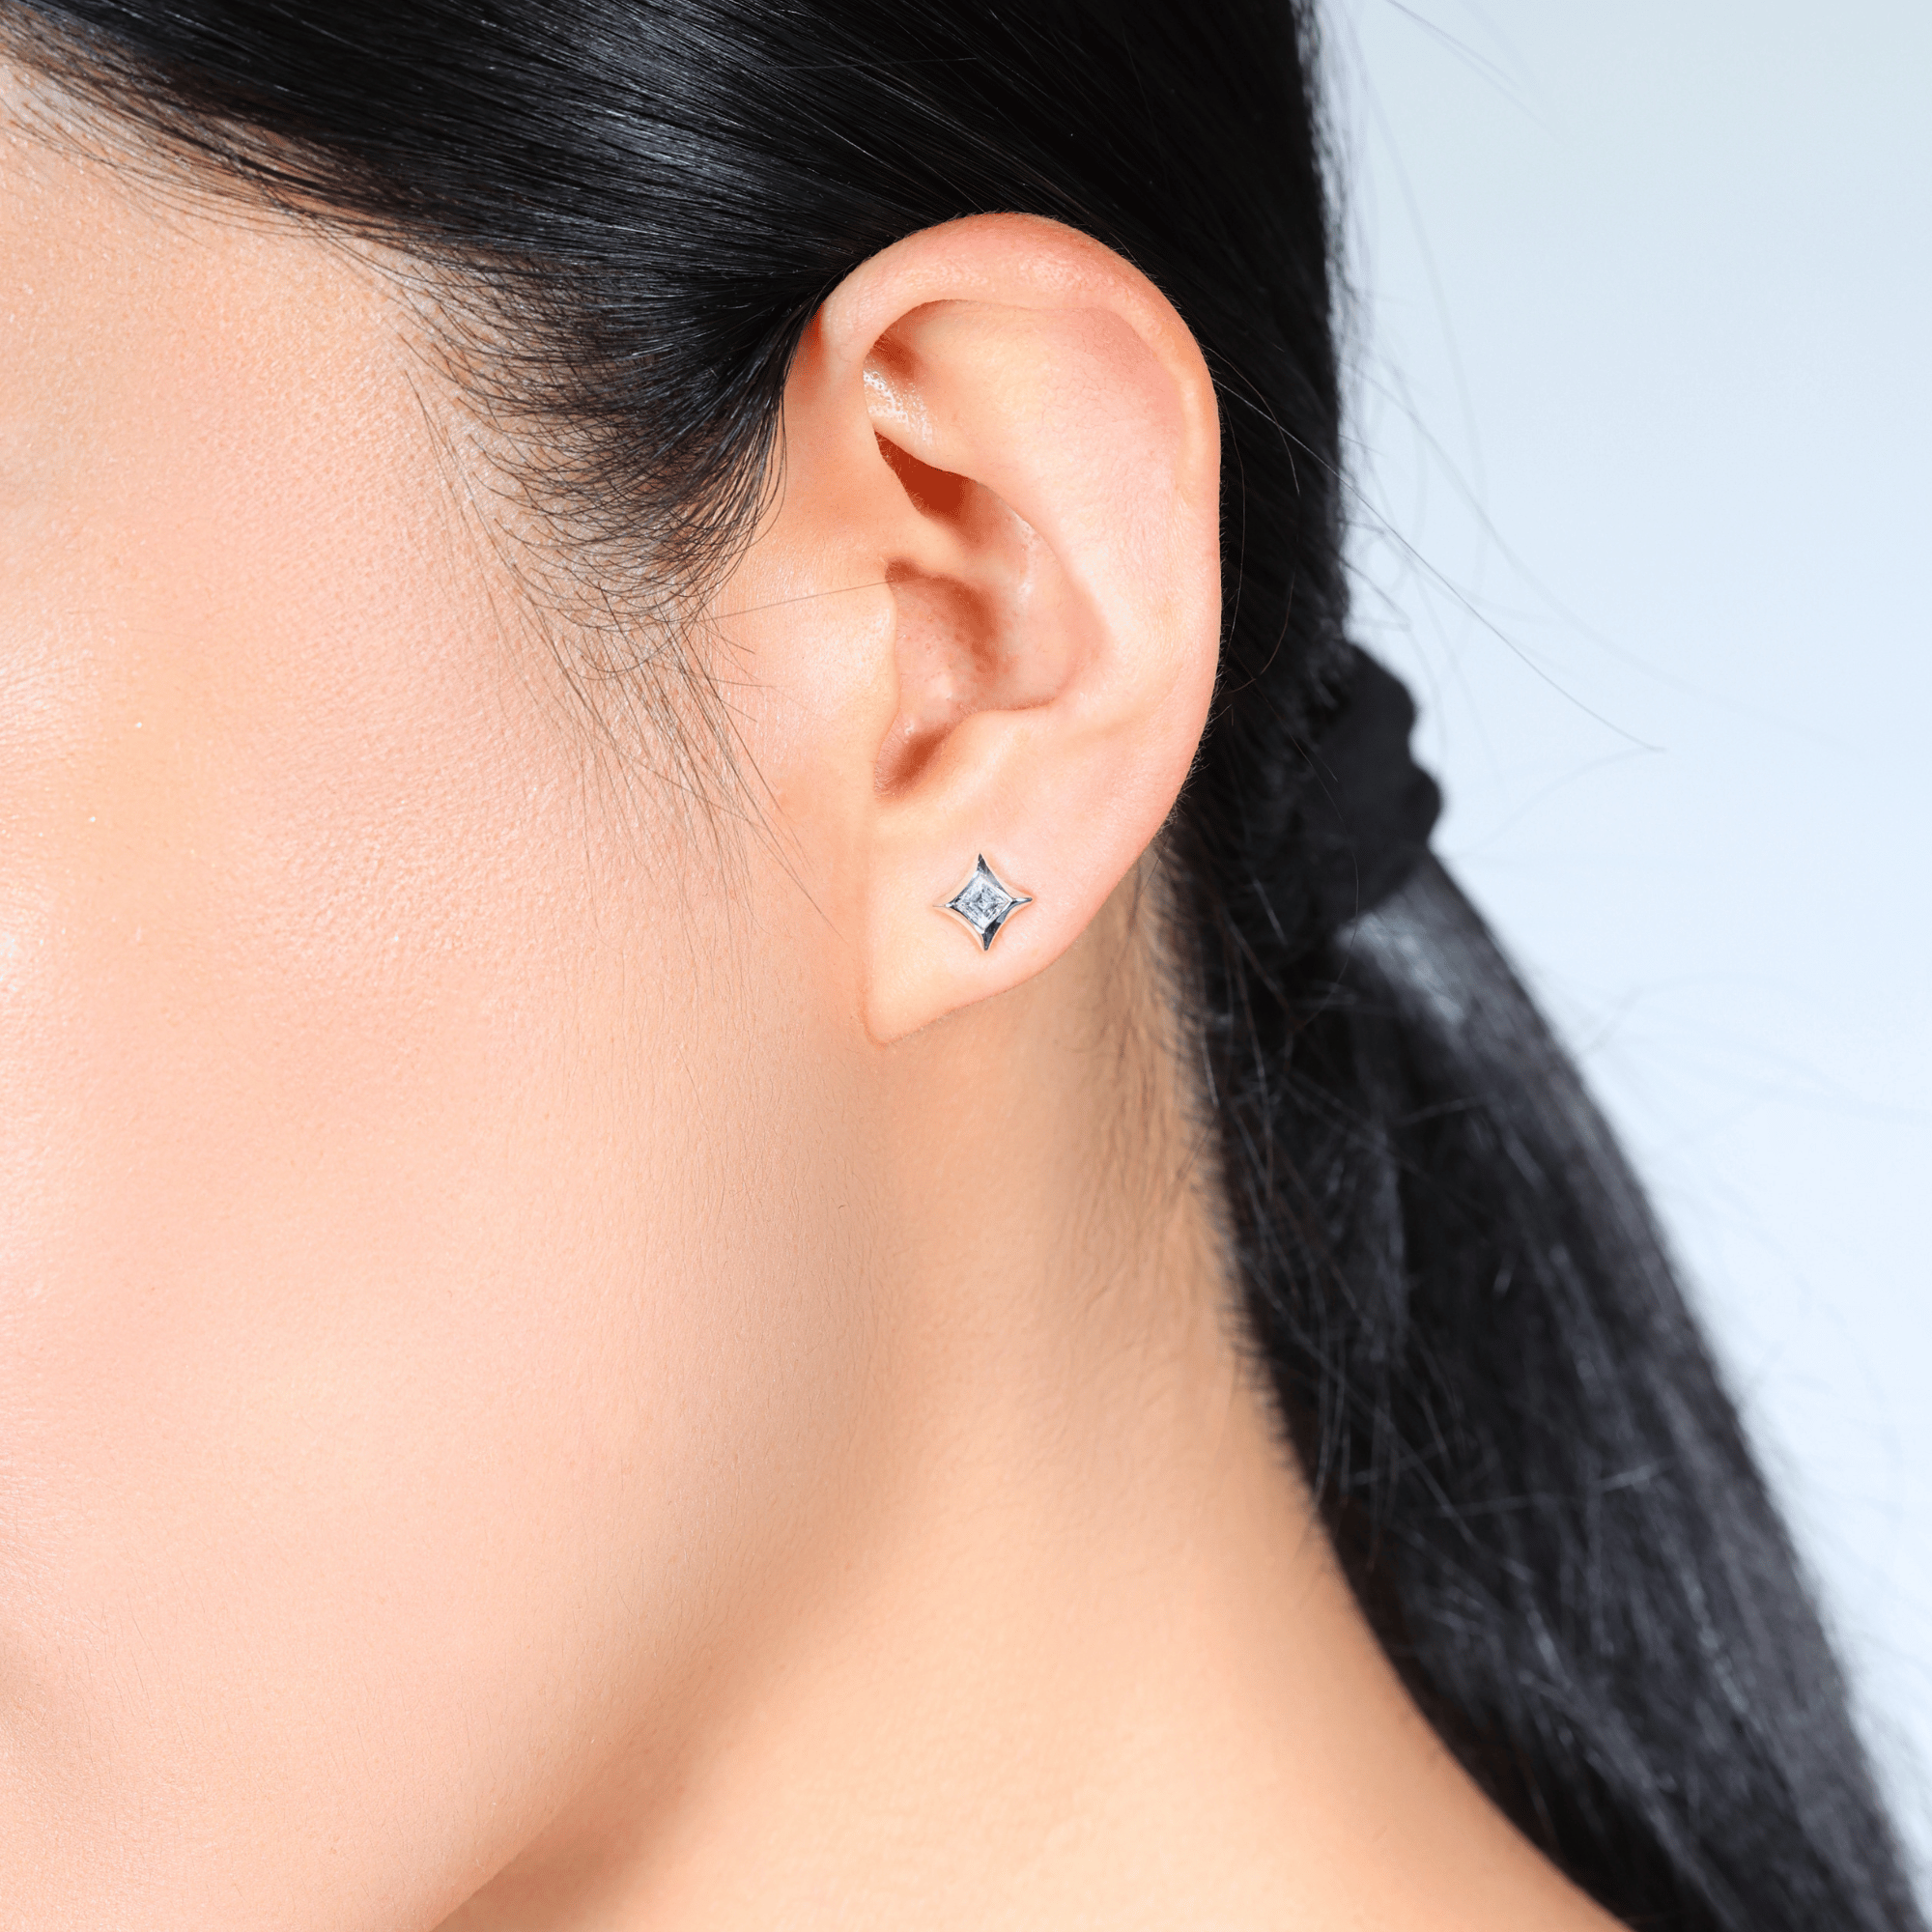 Ginan Carre Cut Diamond Earrings